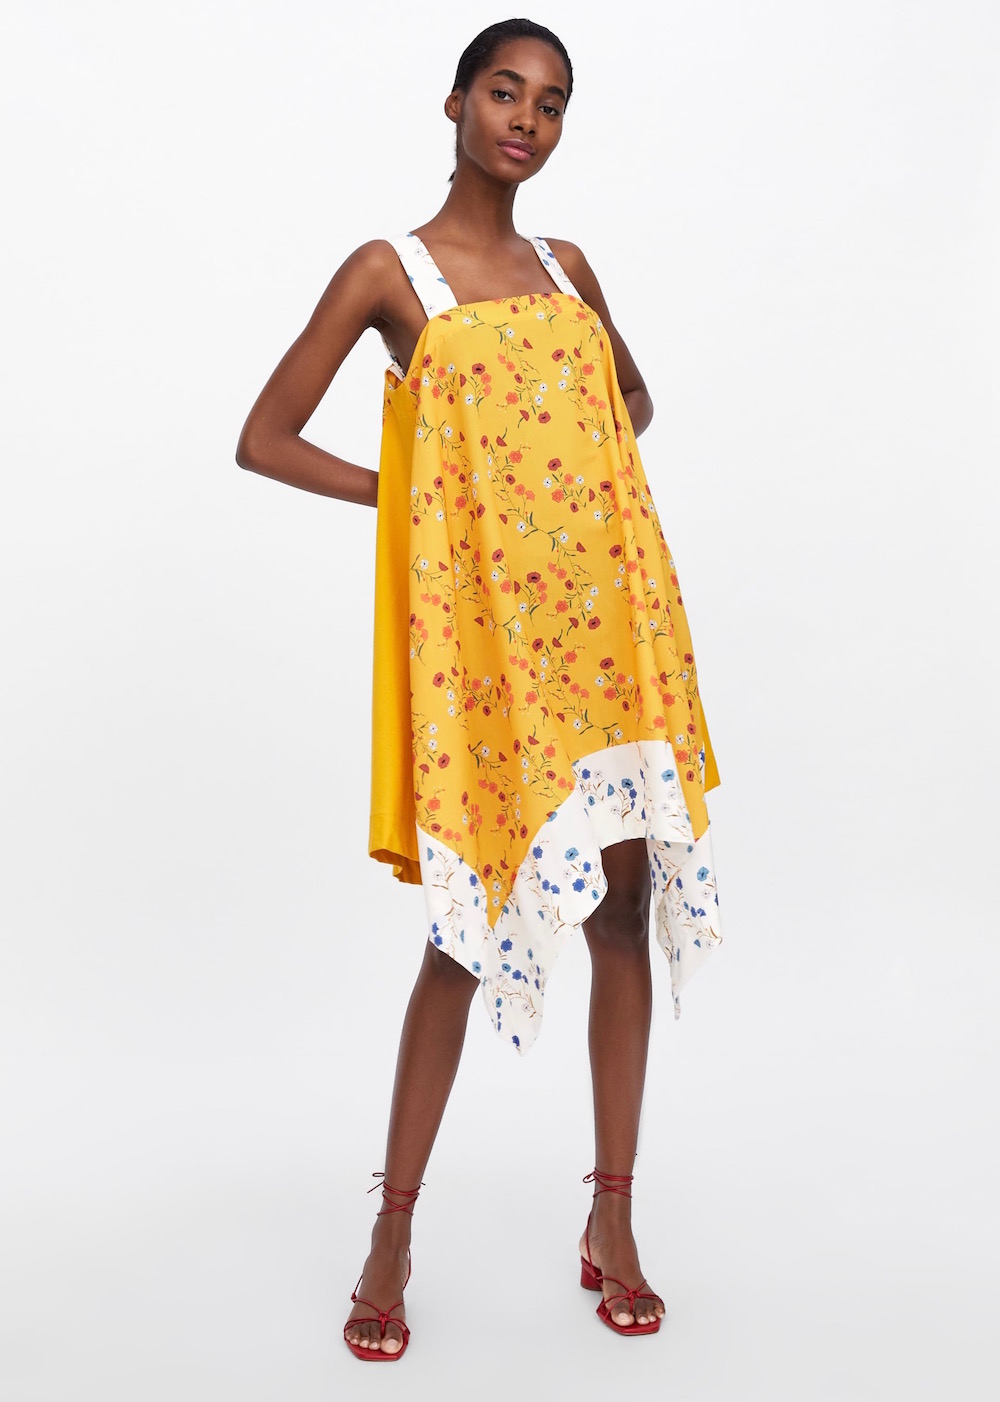 Best Sundresses for Summer Under $100 - theFashionSpot